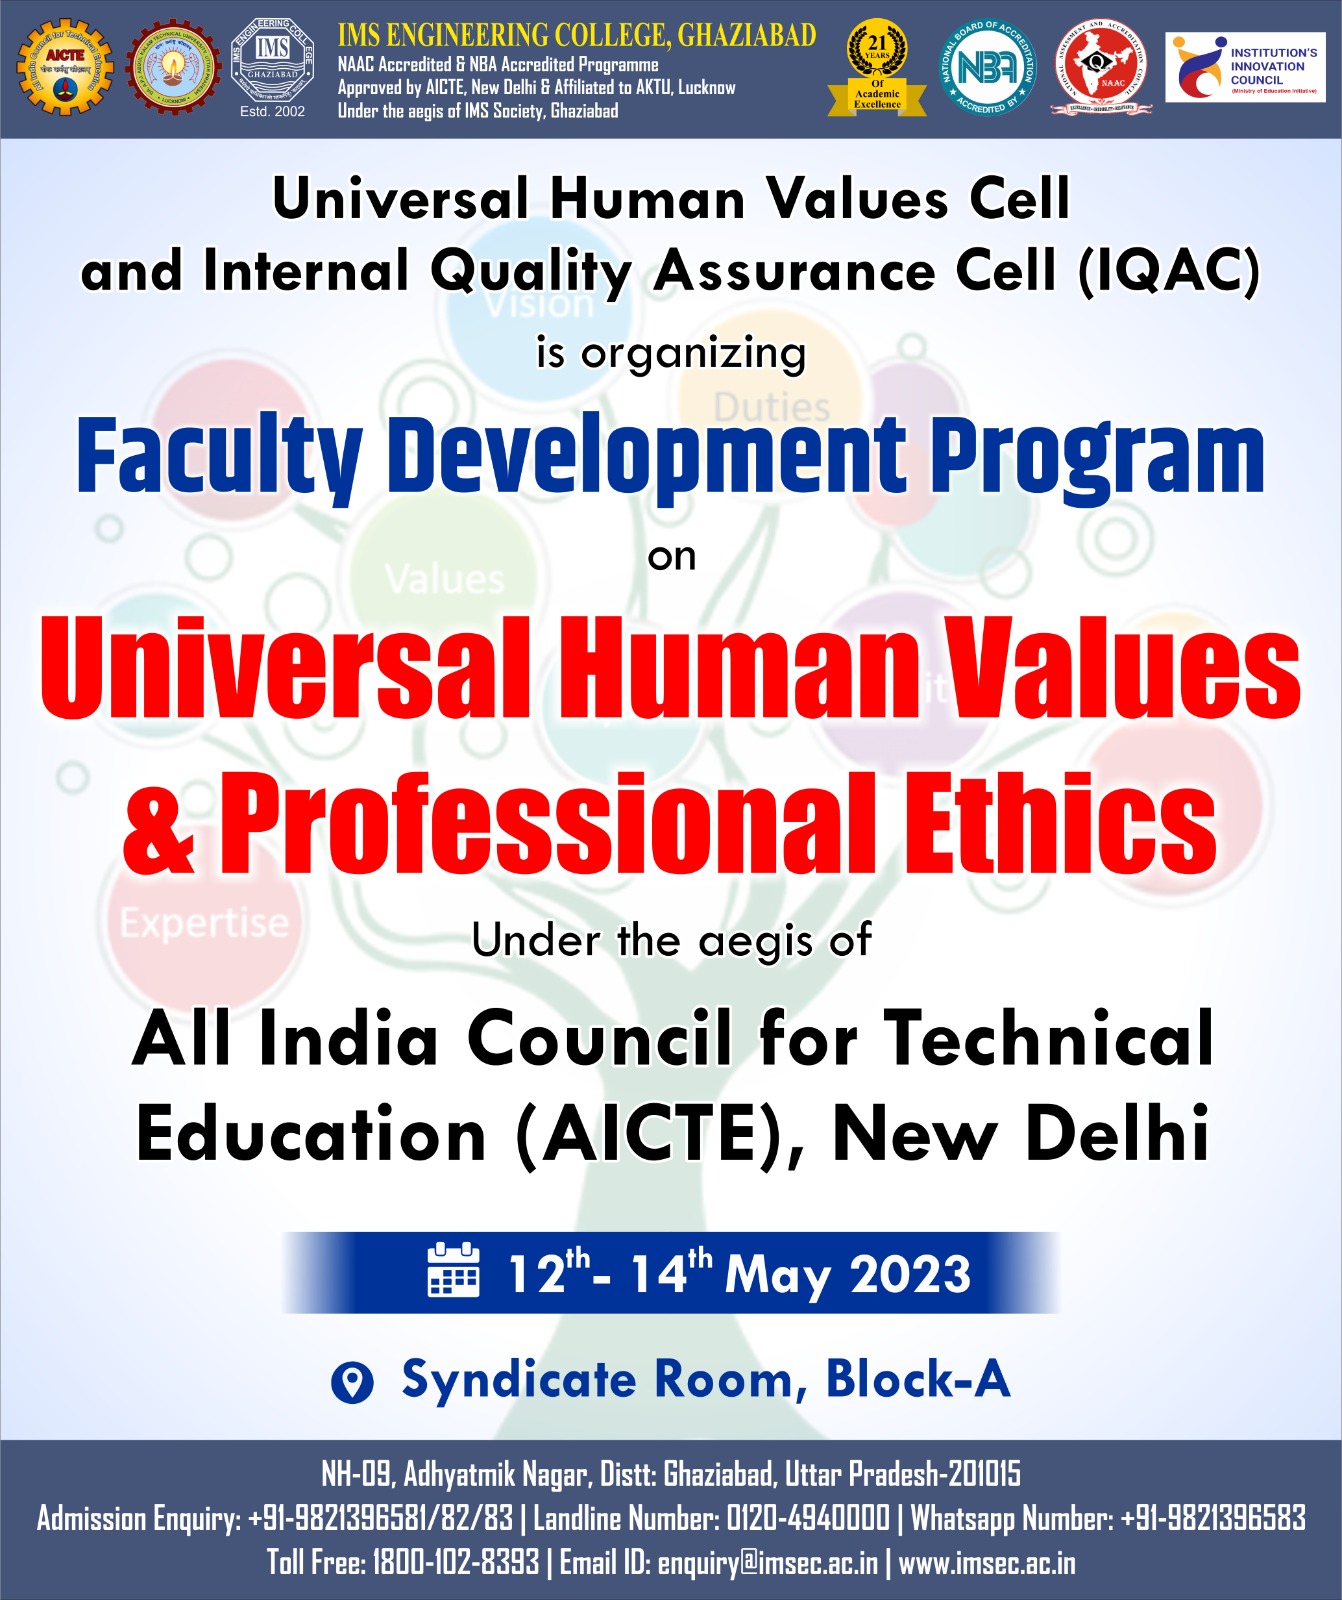 FDP on Universal Human Values & Profession Ethics